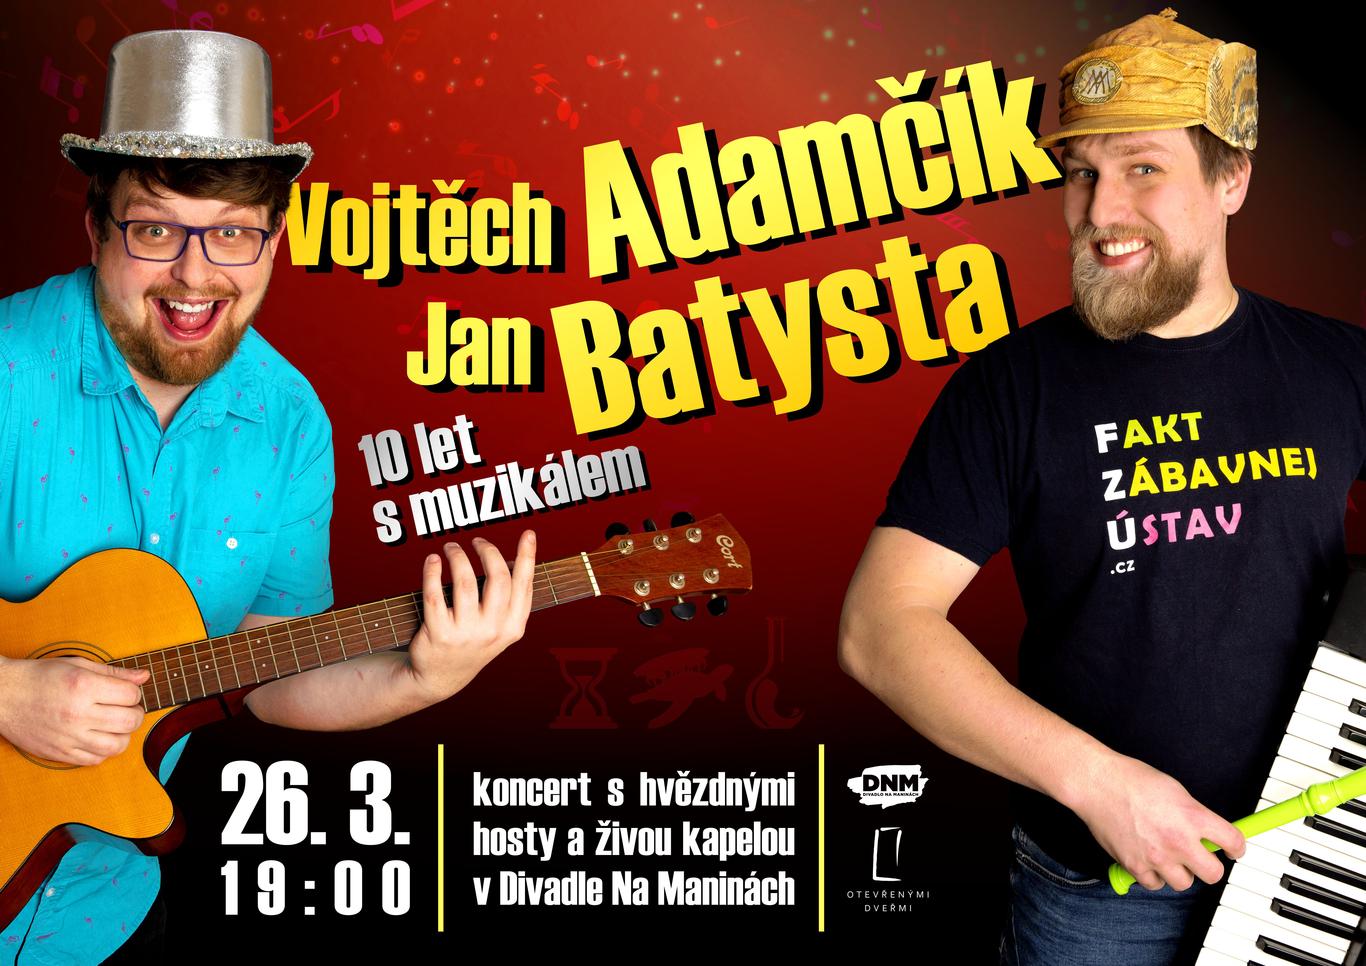 10 let s muzikálem - Vojtěch Adamčík & Jan Batysta